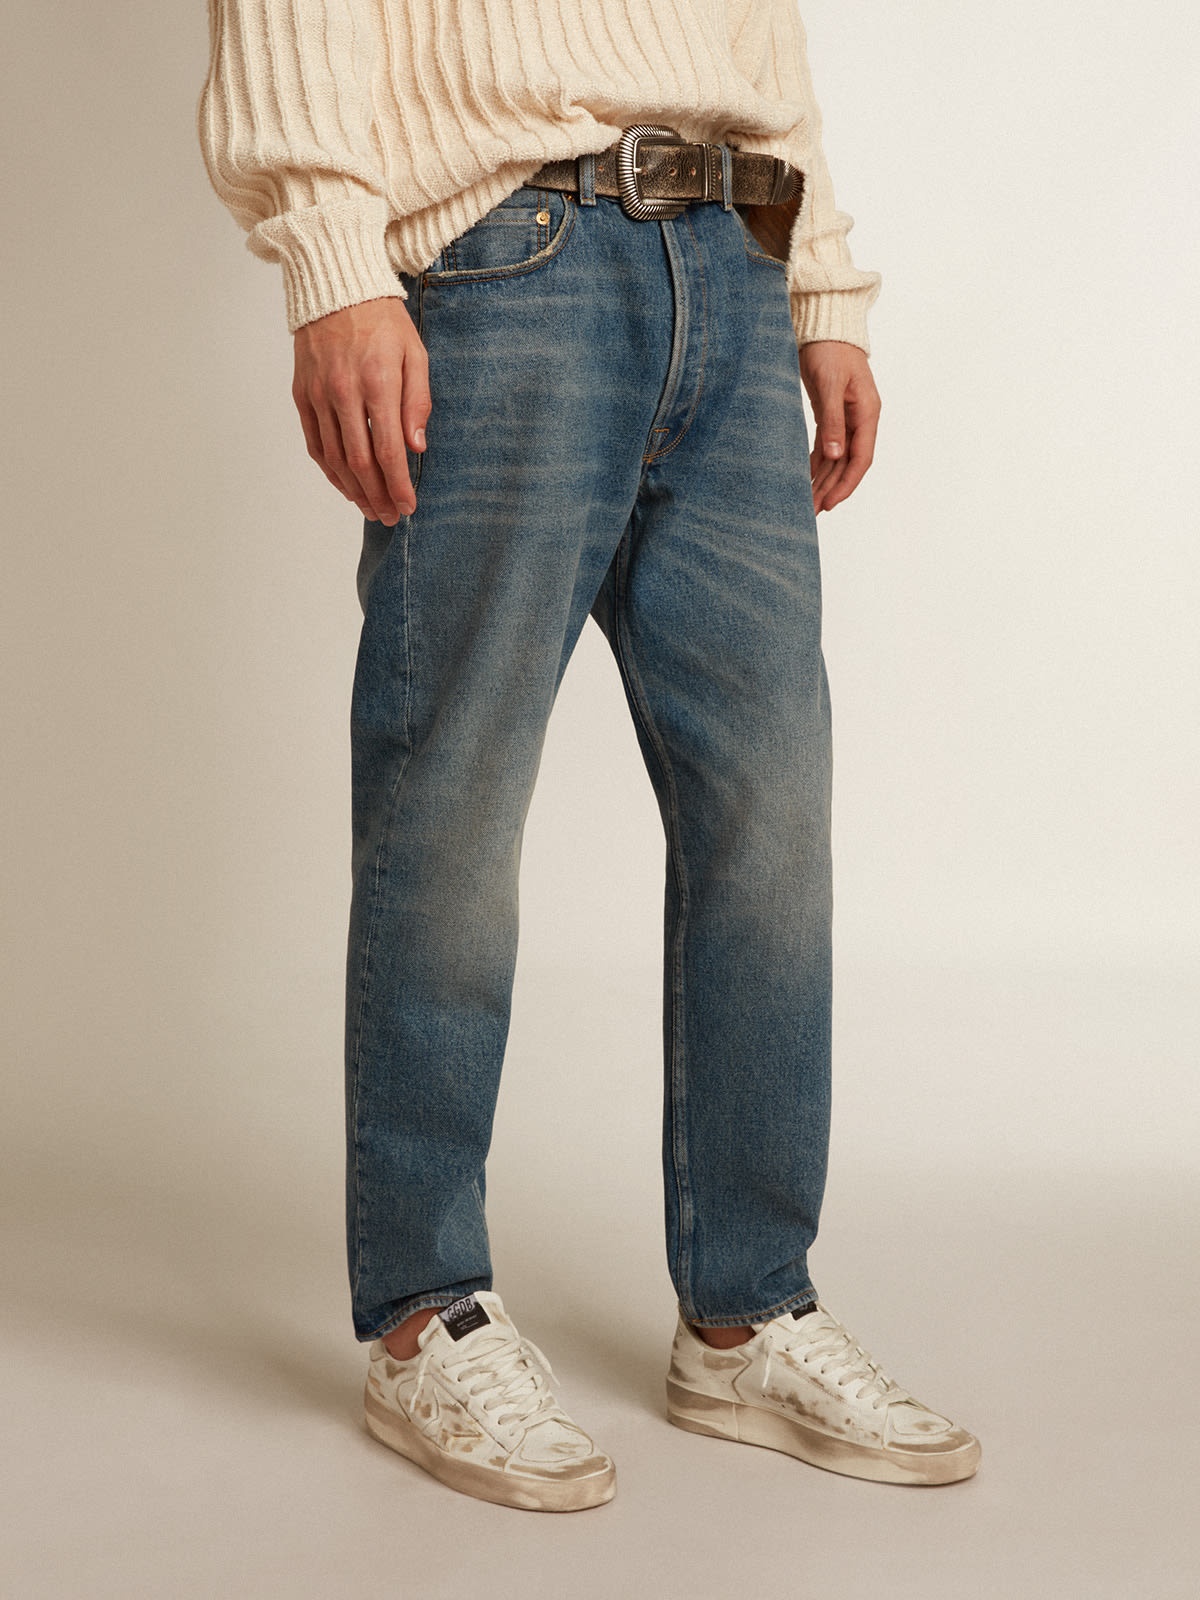 Men's slim fit jeans with medium wash - 2